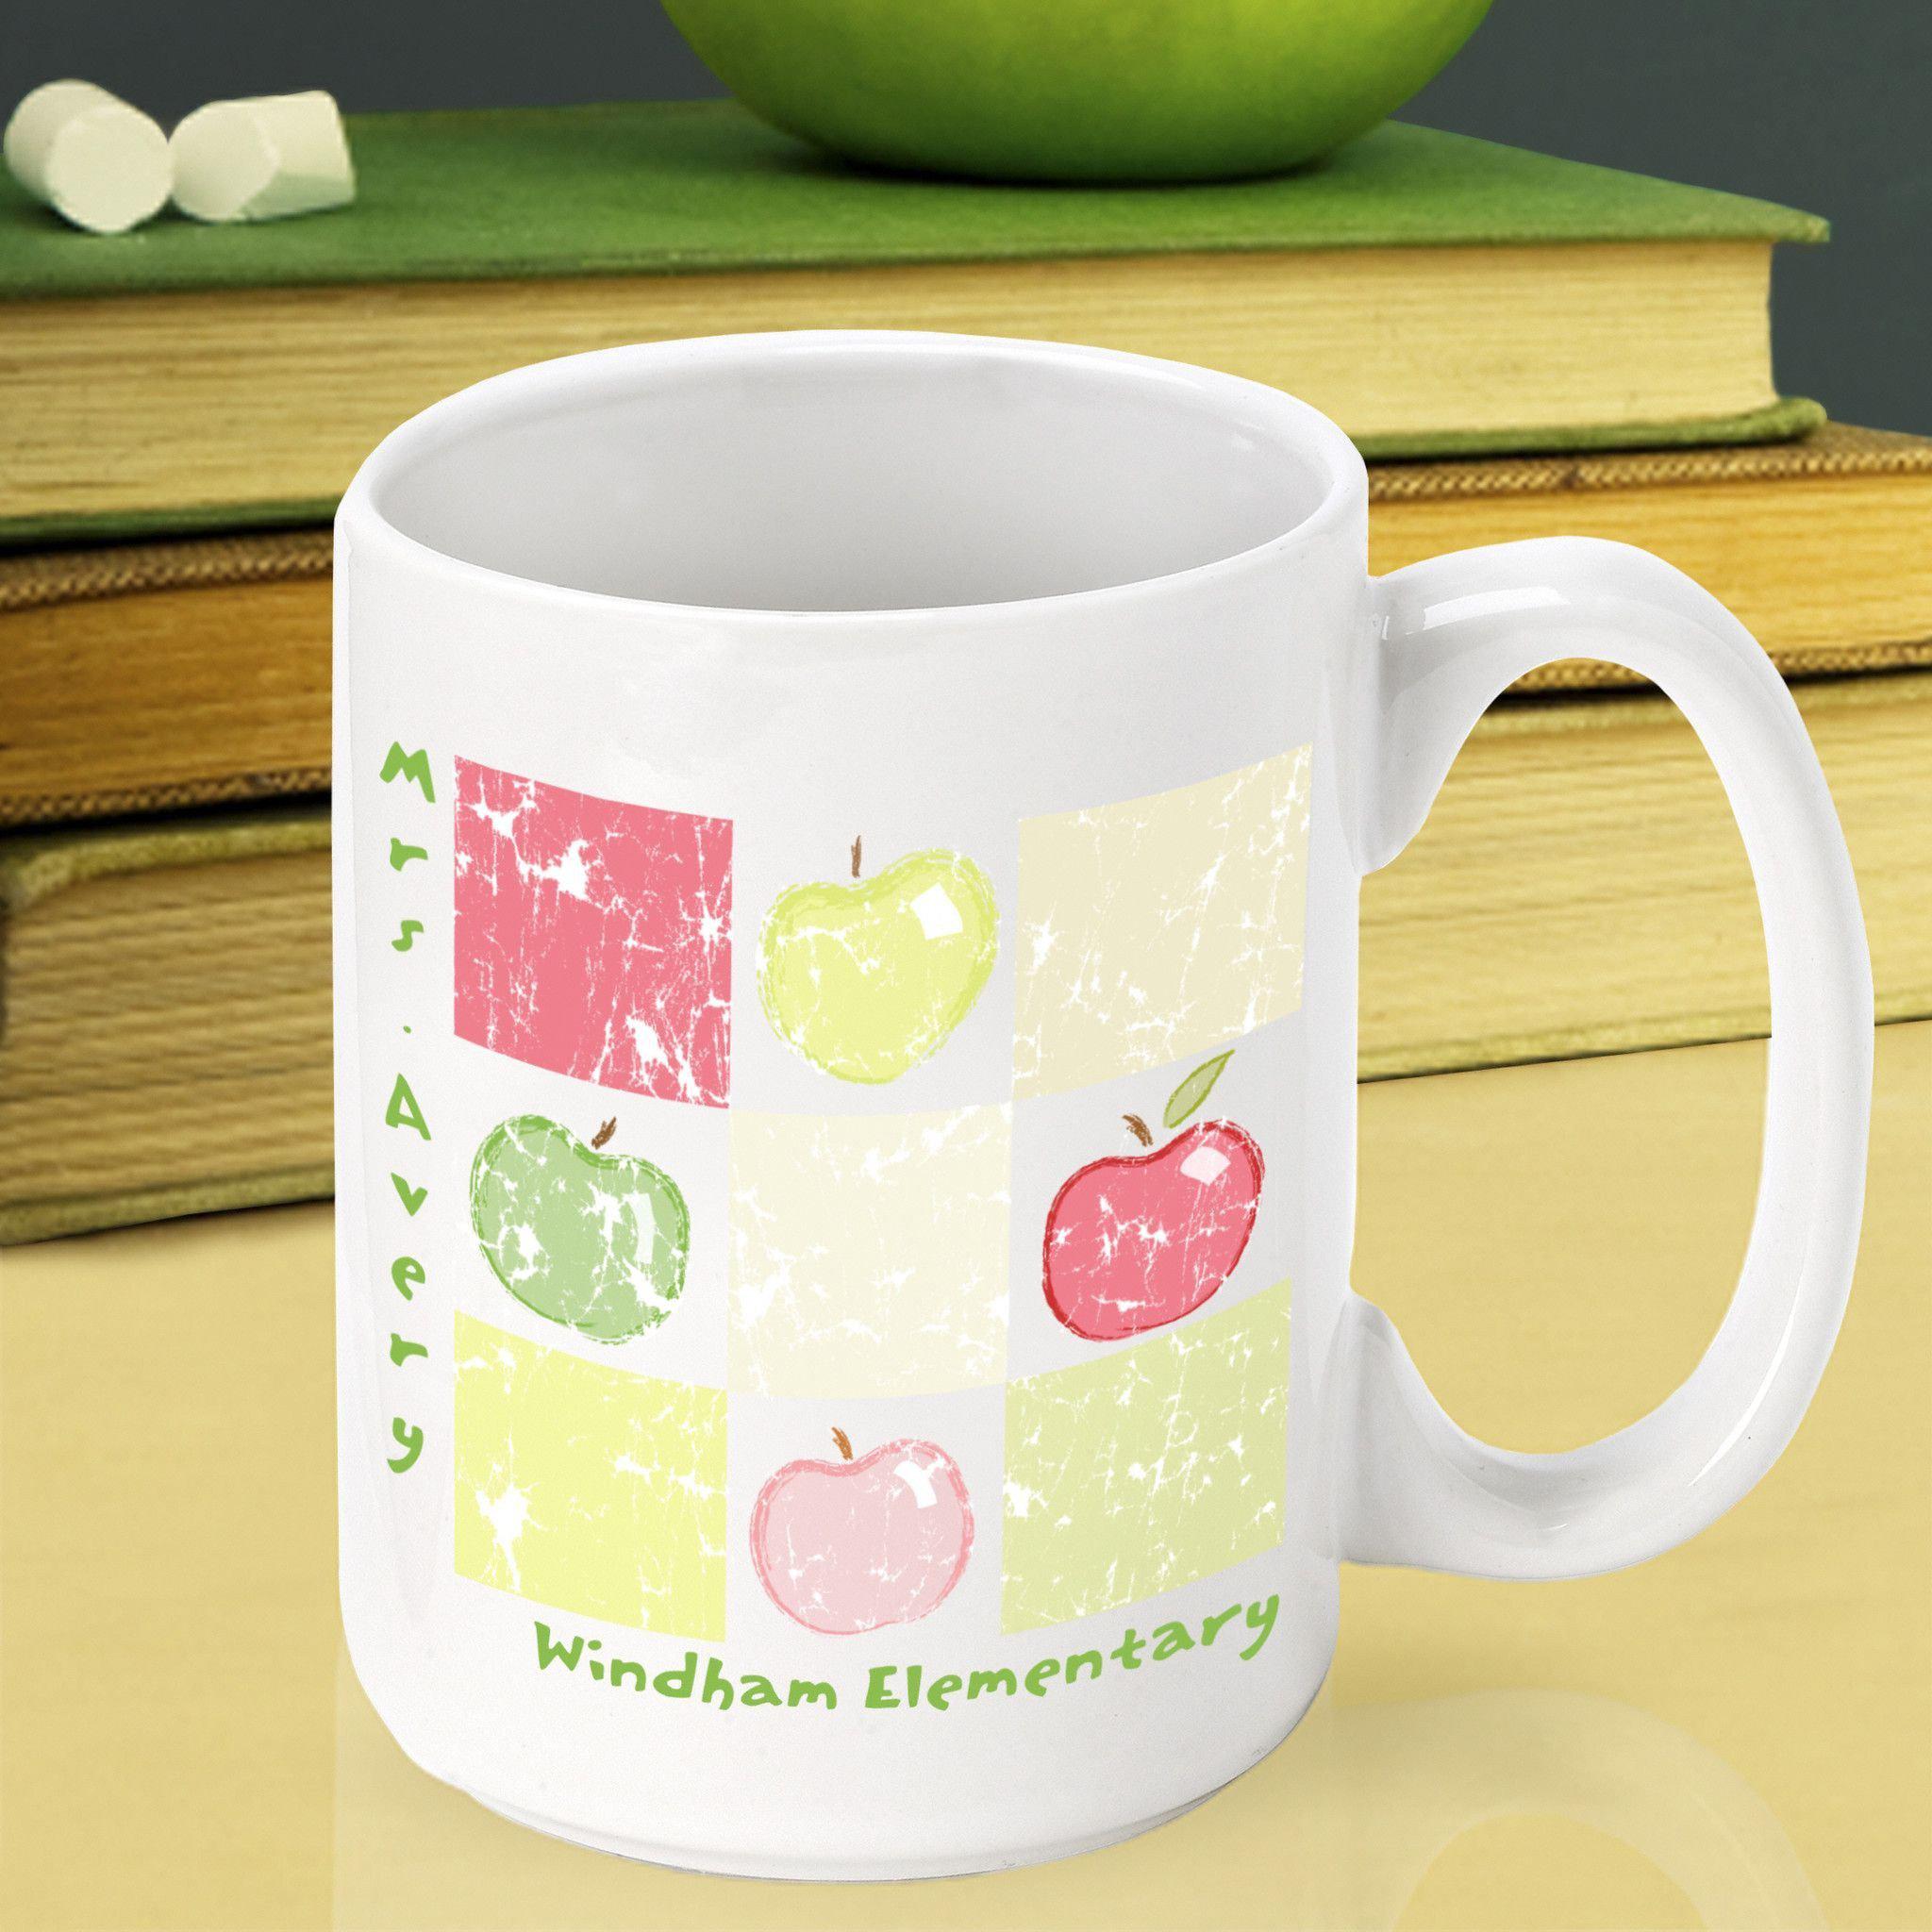 Personalized Teacher Coffee Mugs